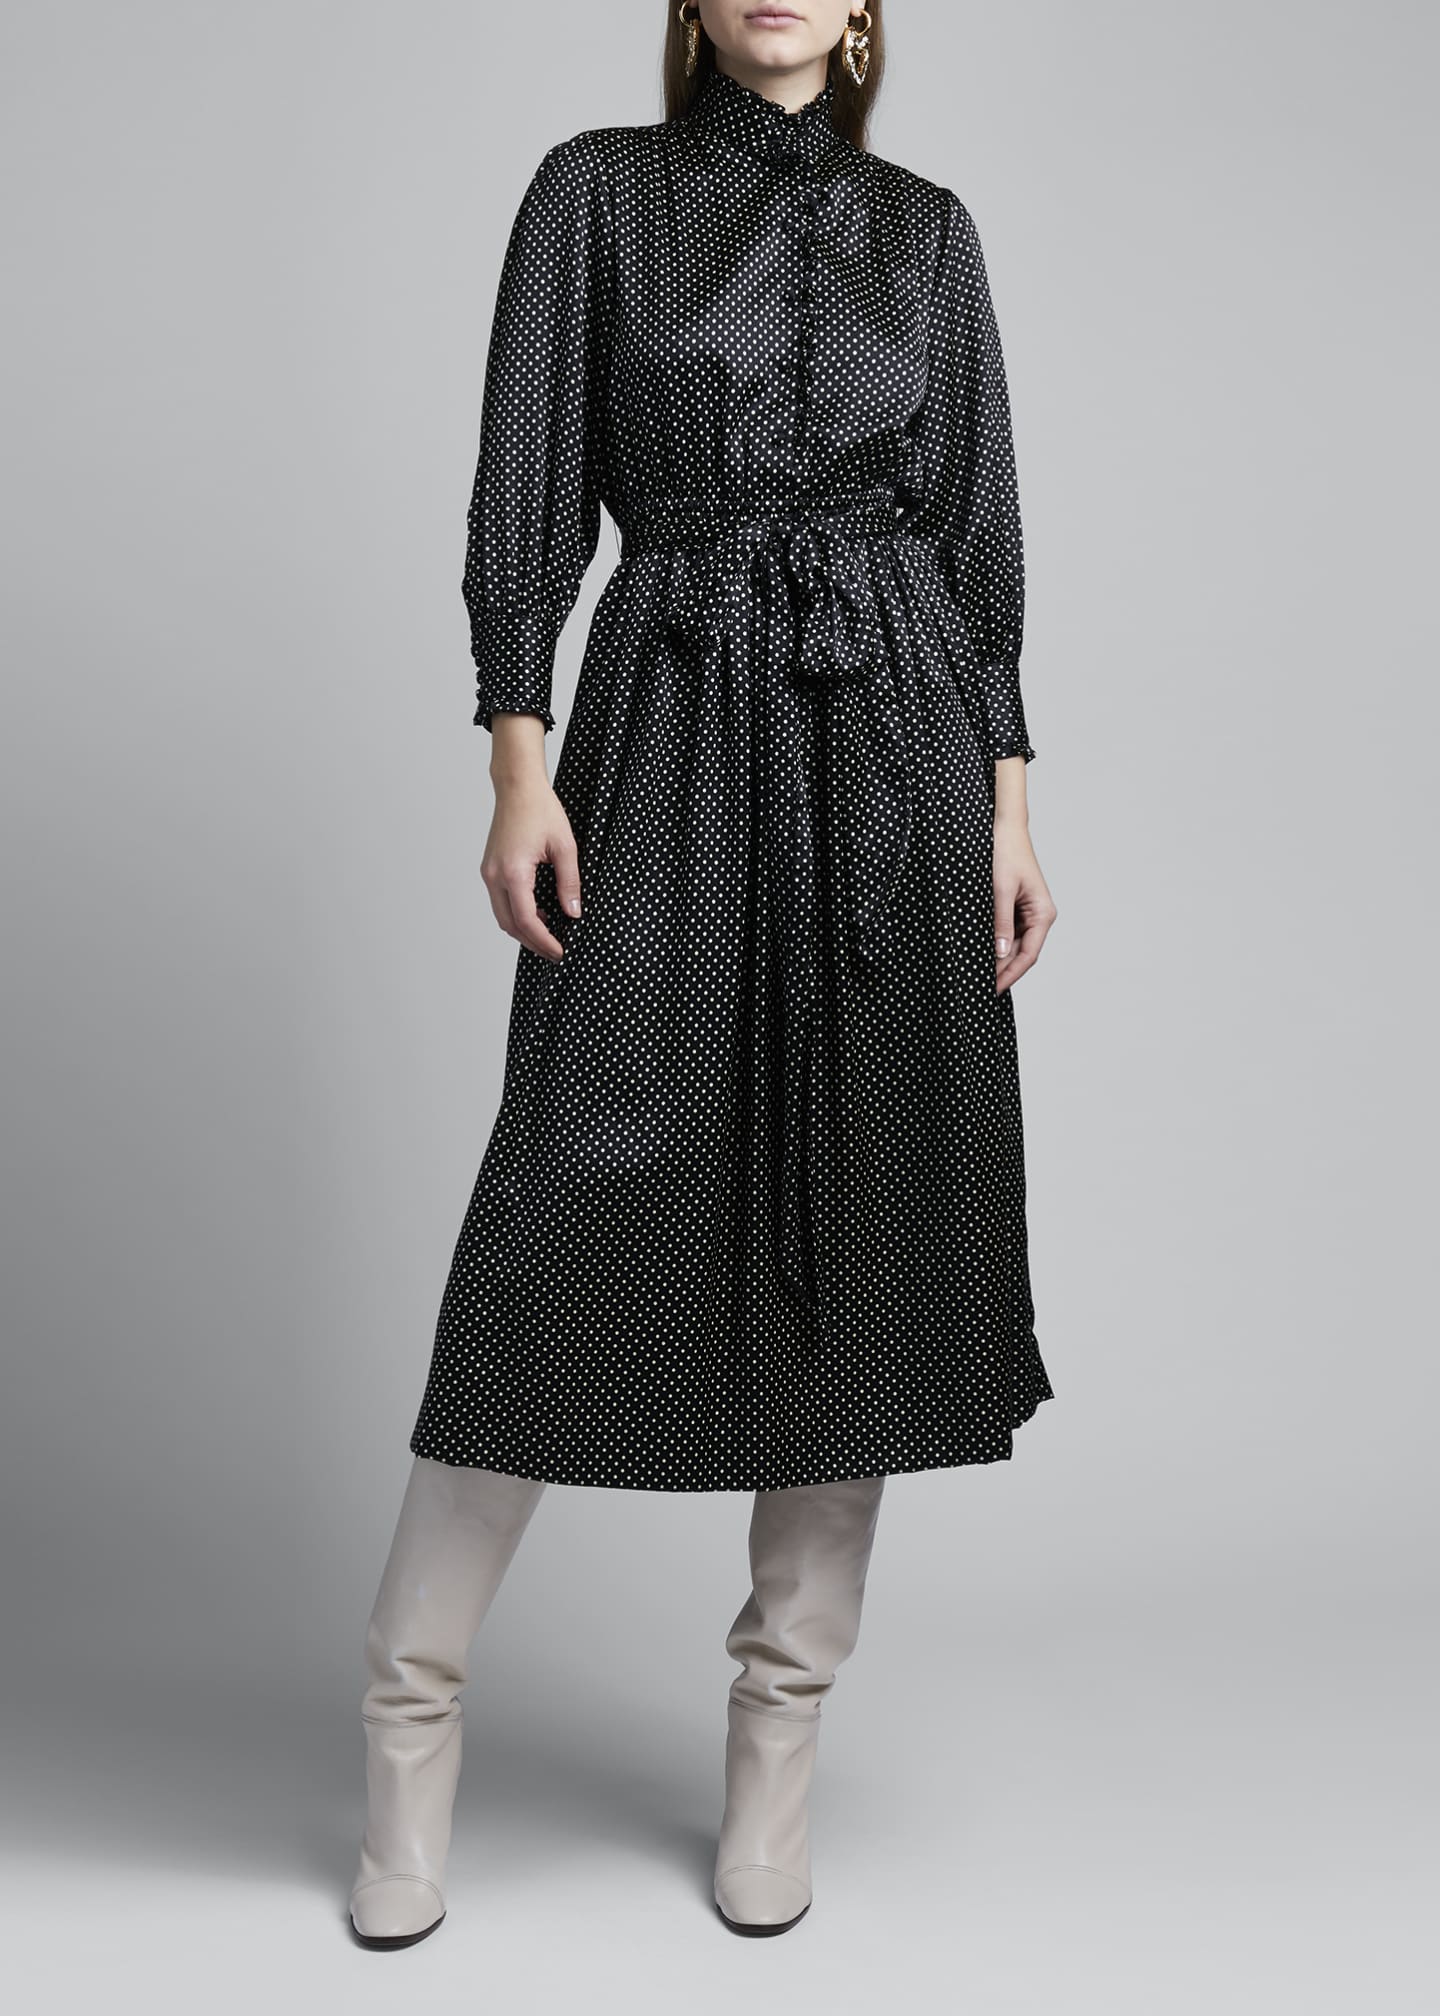 Marc Jacobs (Runway) Polka Dot Silk Satin Dress - Bergdorf Goodman